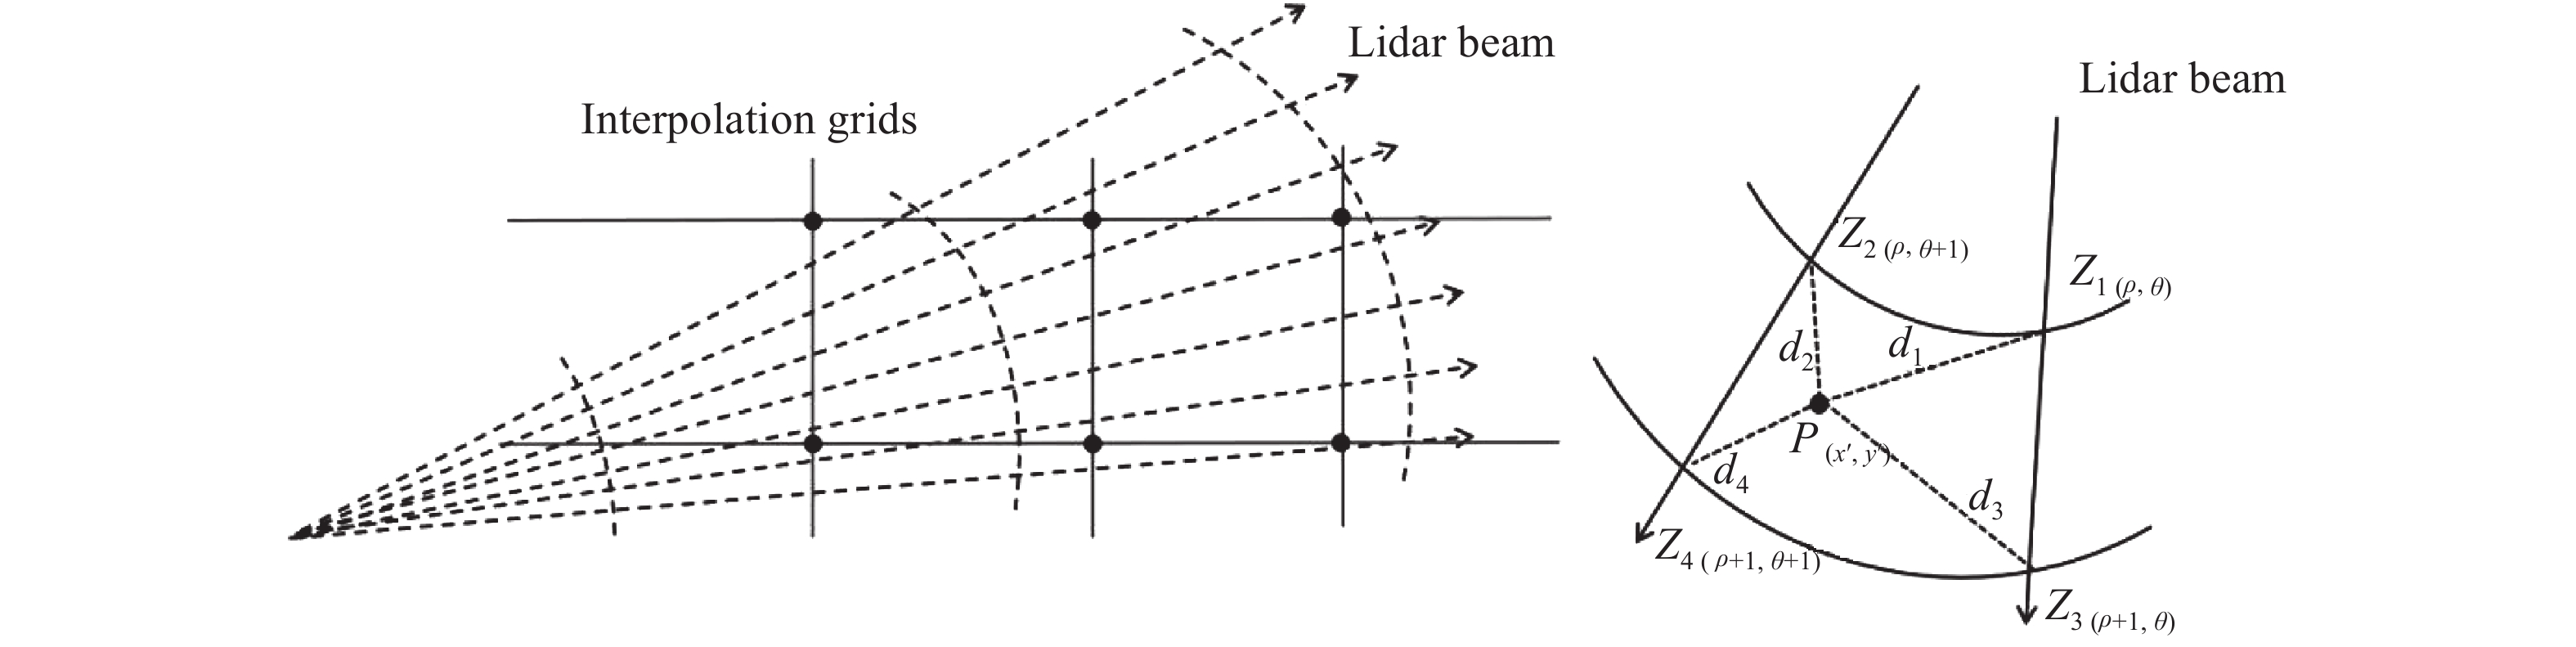 Schematic diagram of coordinate transform